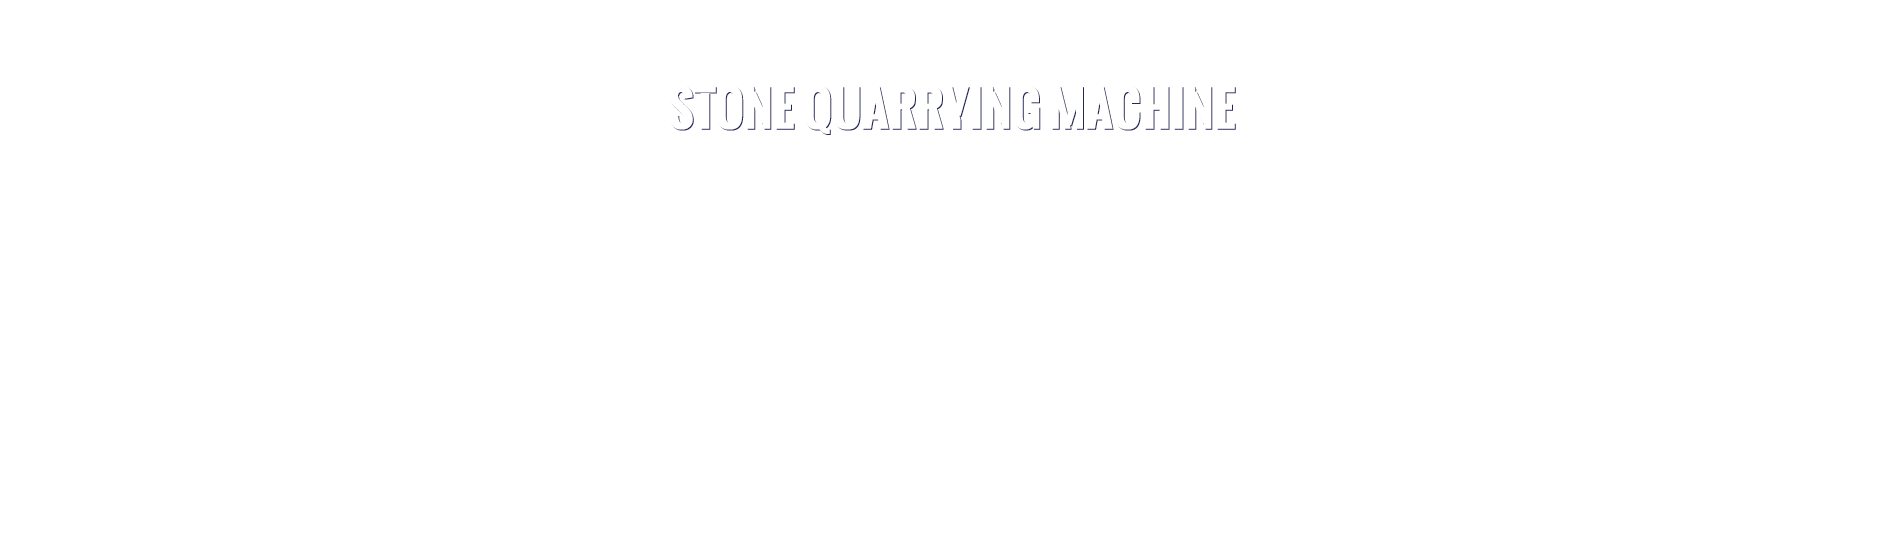 Stone Quarry Cutting Machine